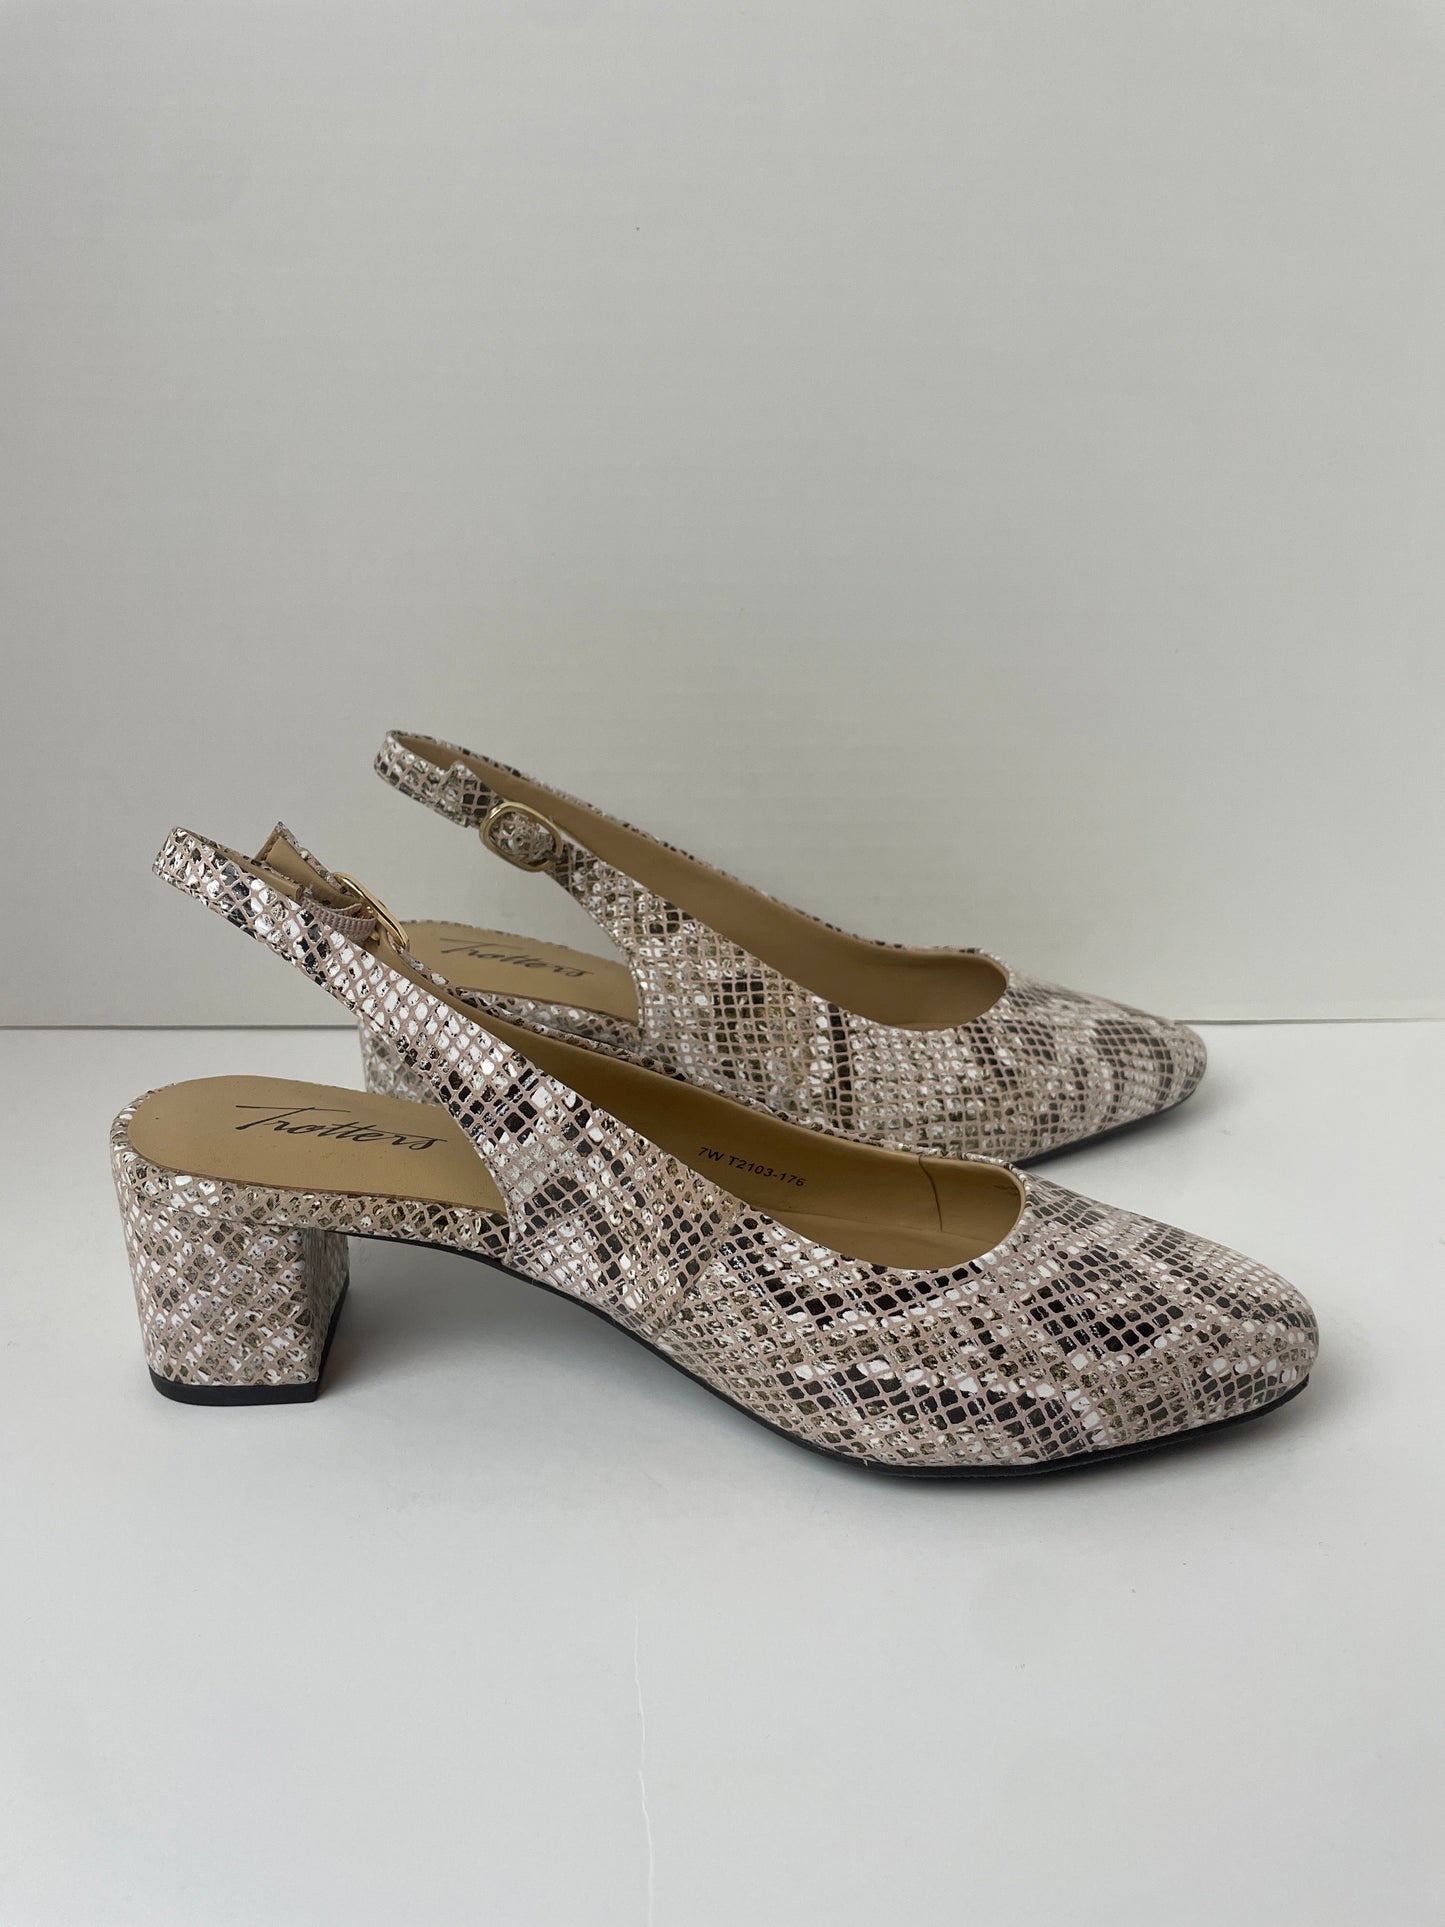 Snakeskin Print Shoes Heels Block Cmf, Size 7